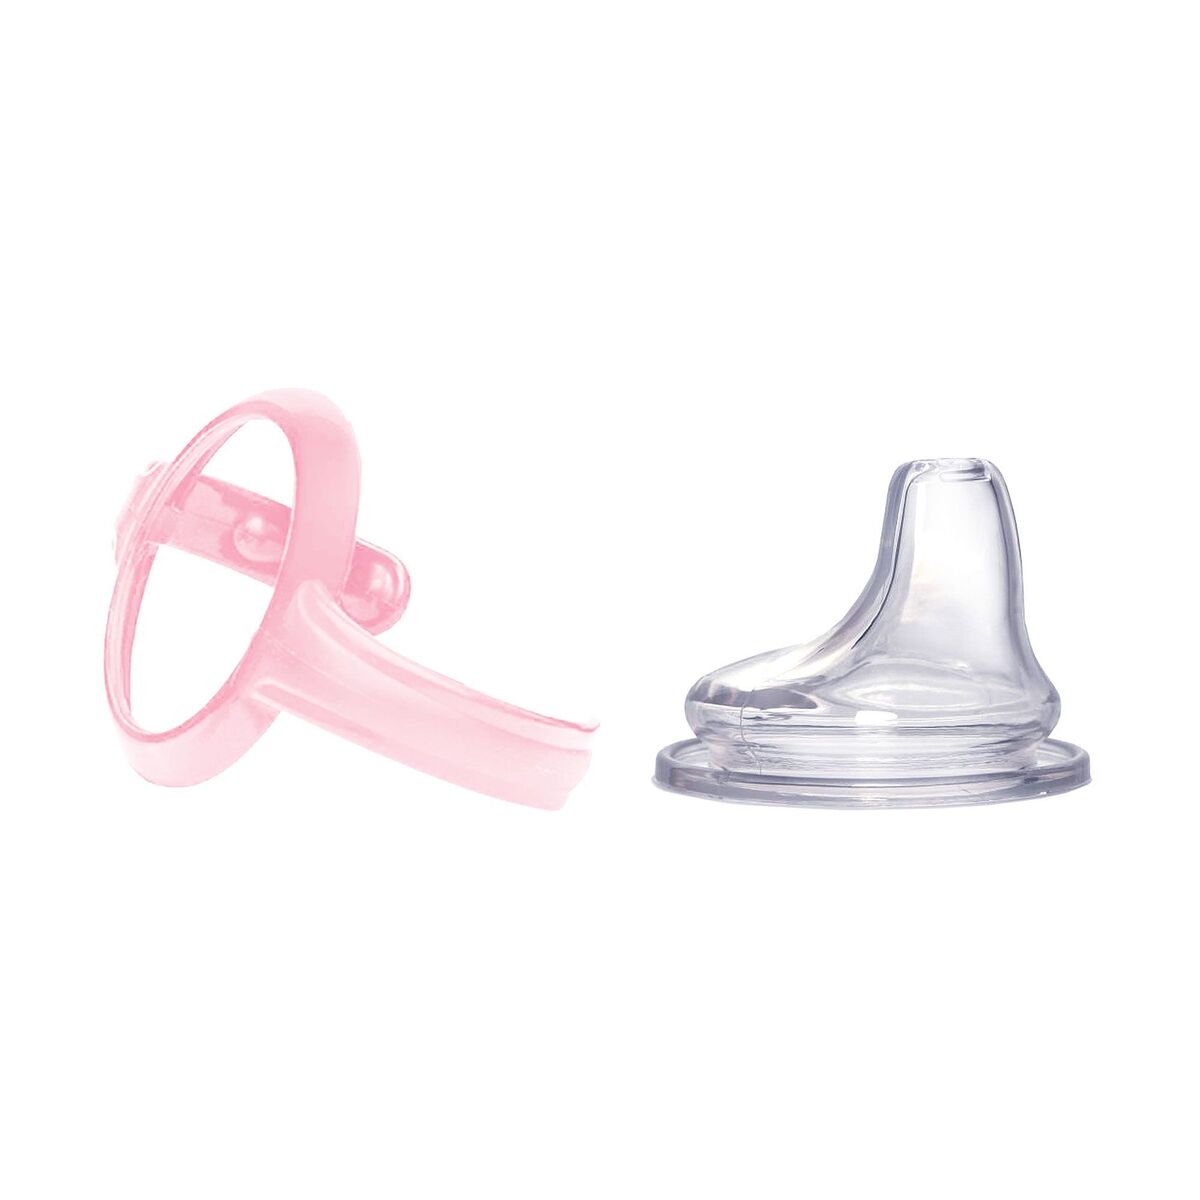 Everyday Baby Pipmugg-kit, Pink